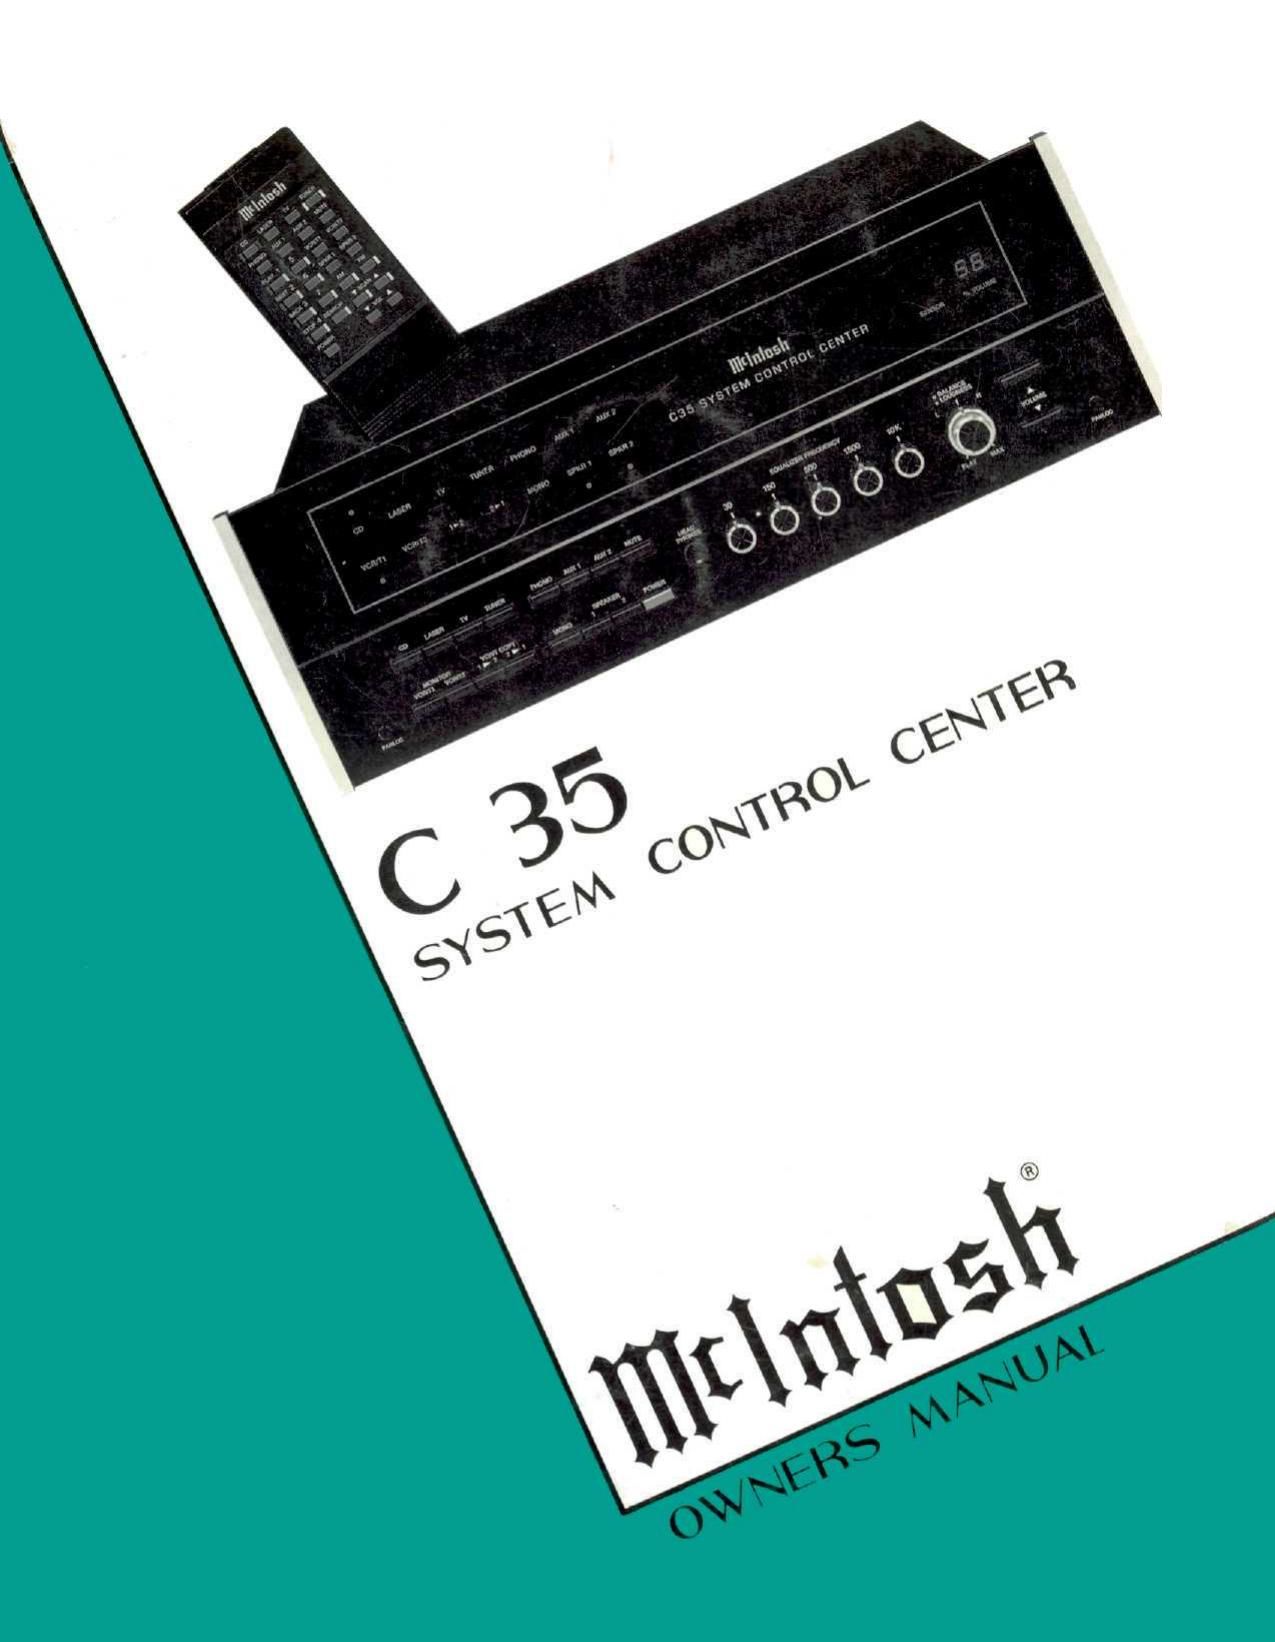 McIntosh C 35 Owners Manual